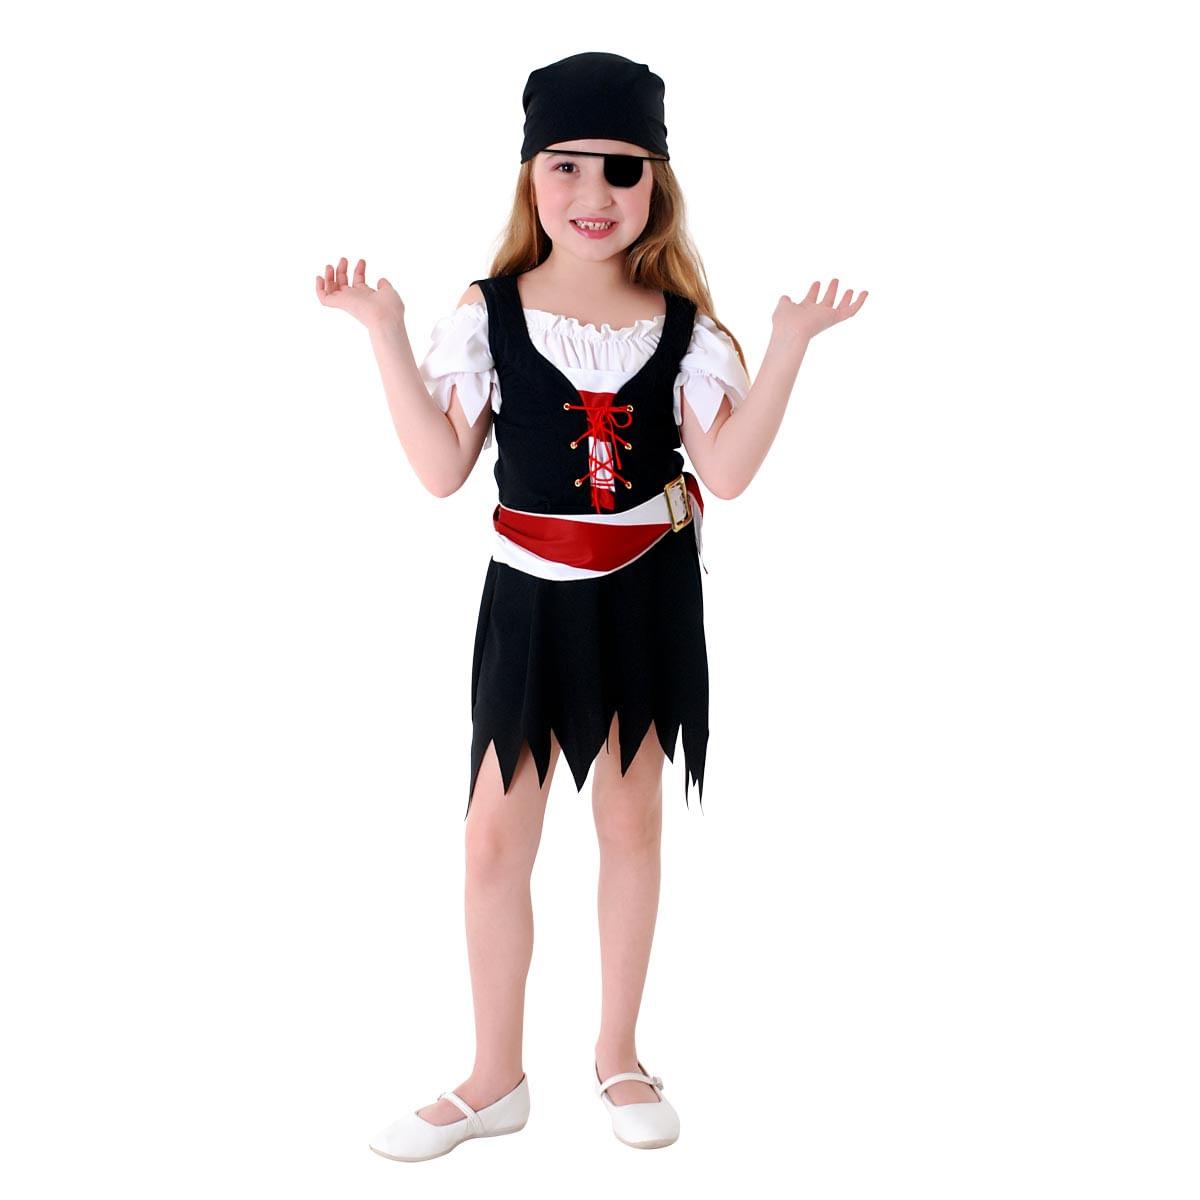 Fantasia Pirata Vestido Feminino Infantil P / UNICA